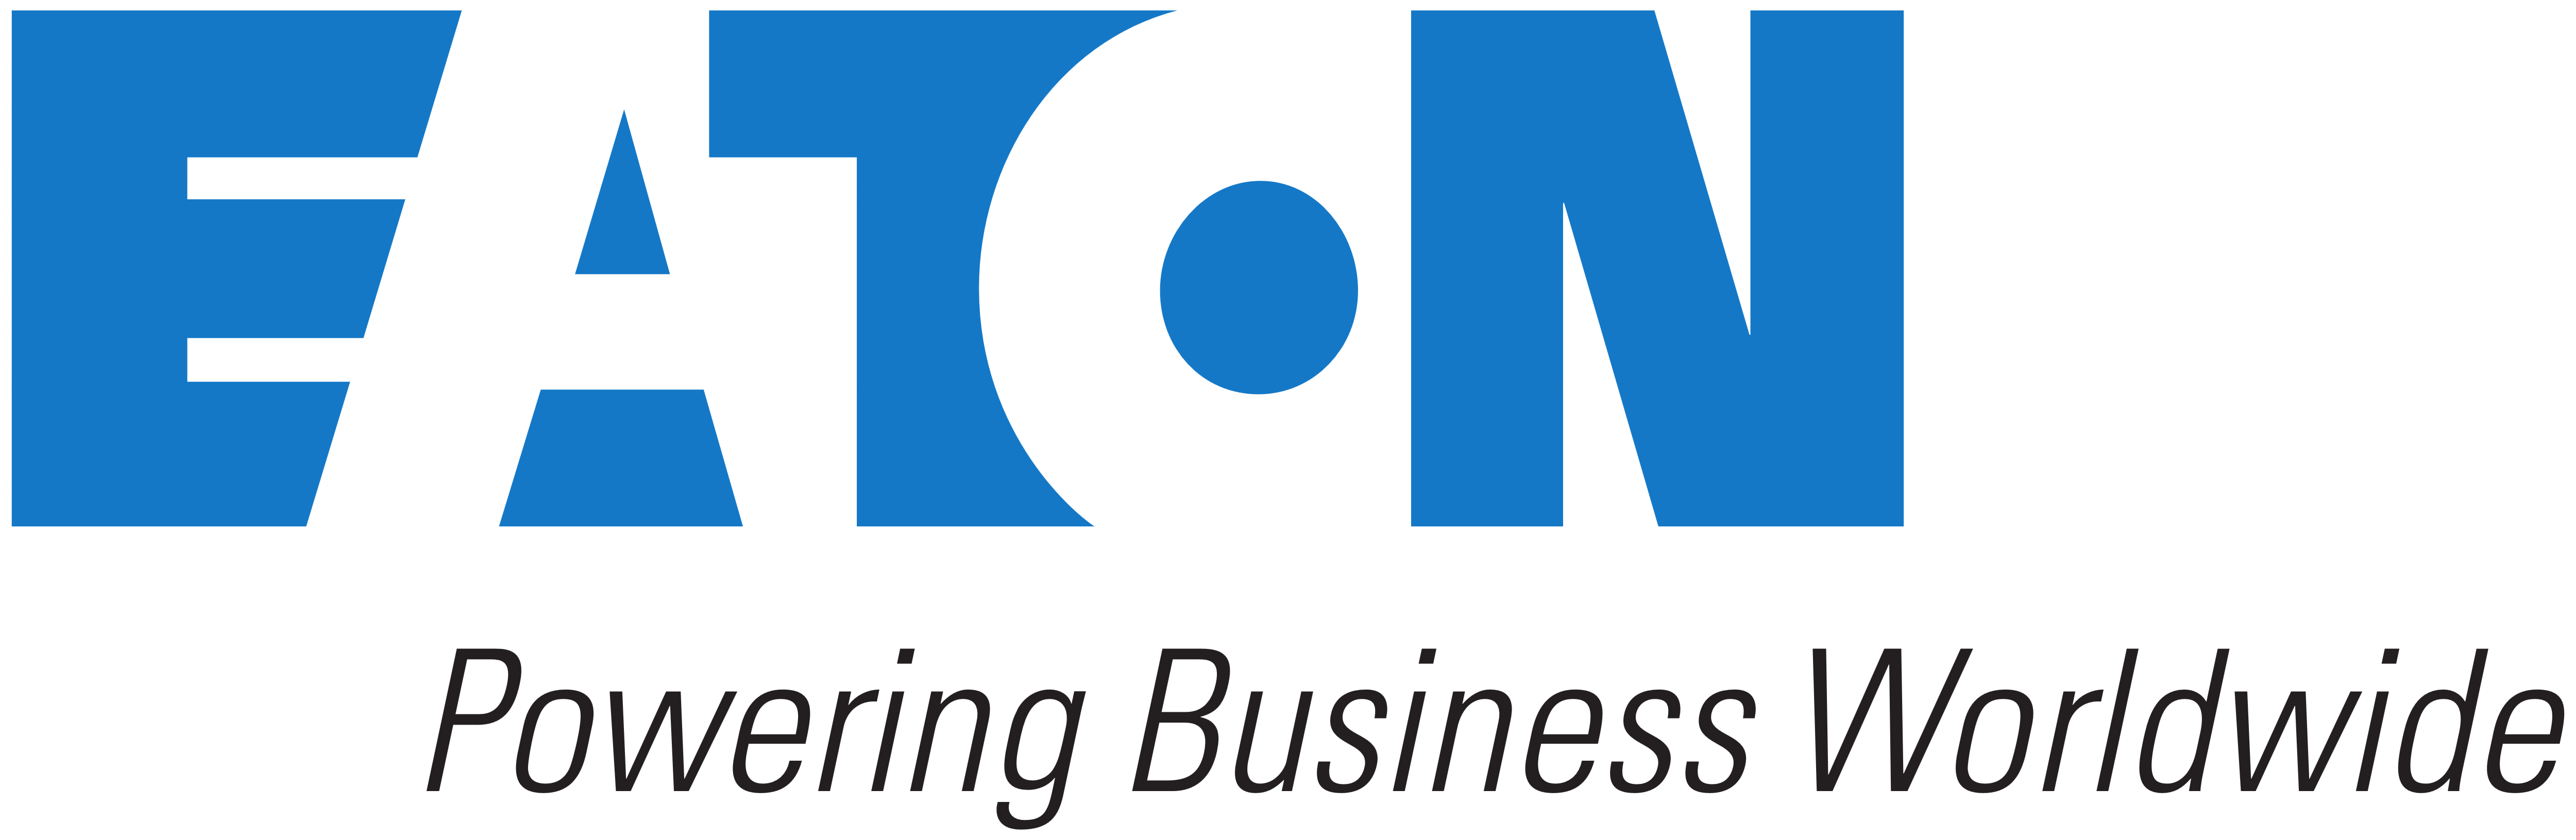 Eaton Logo - Eaton logo